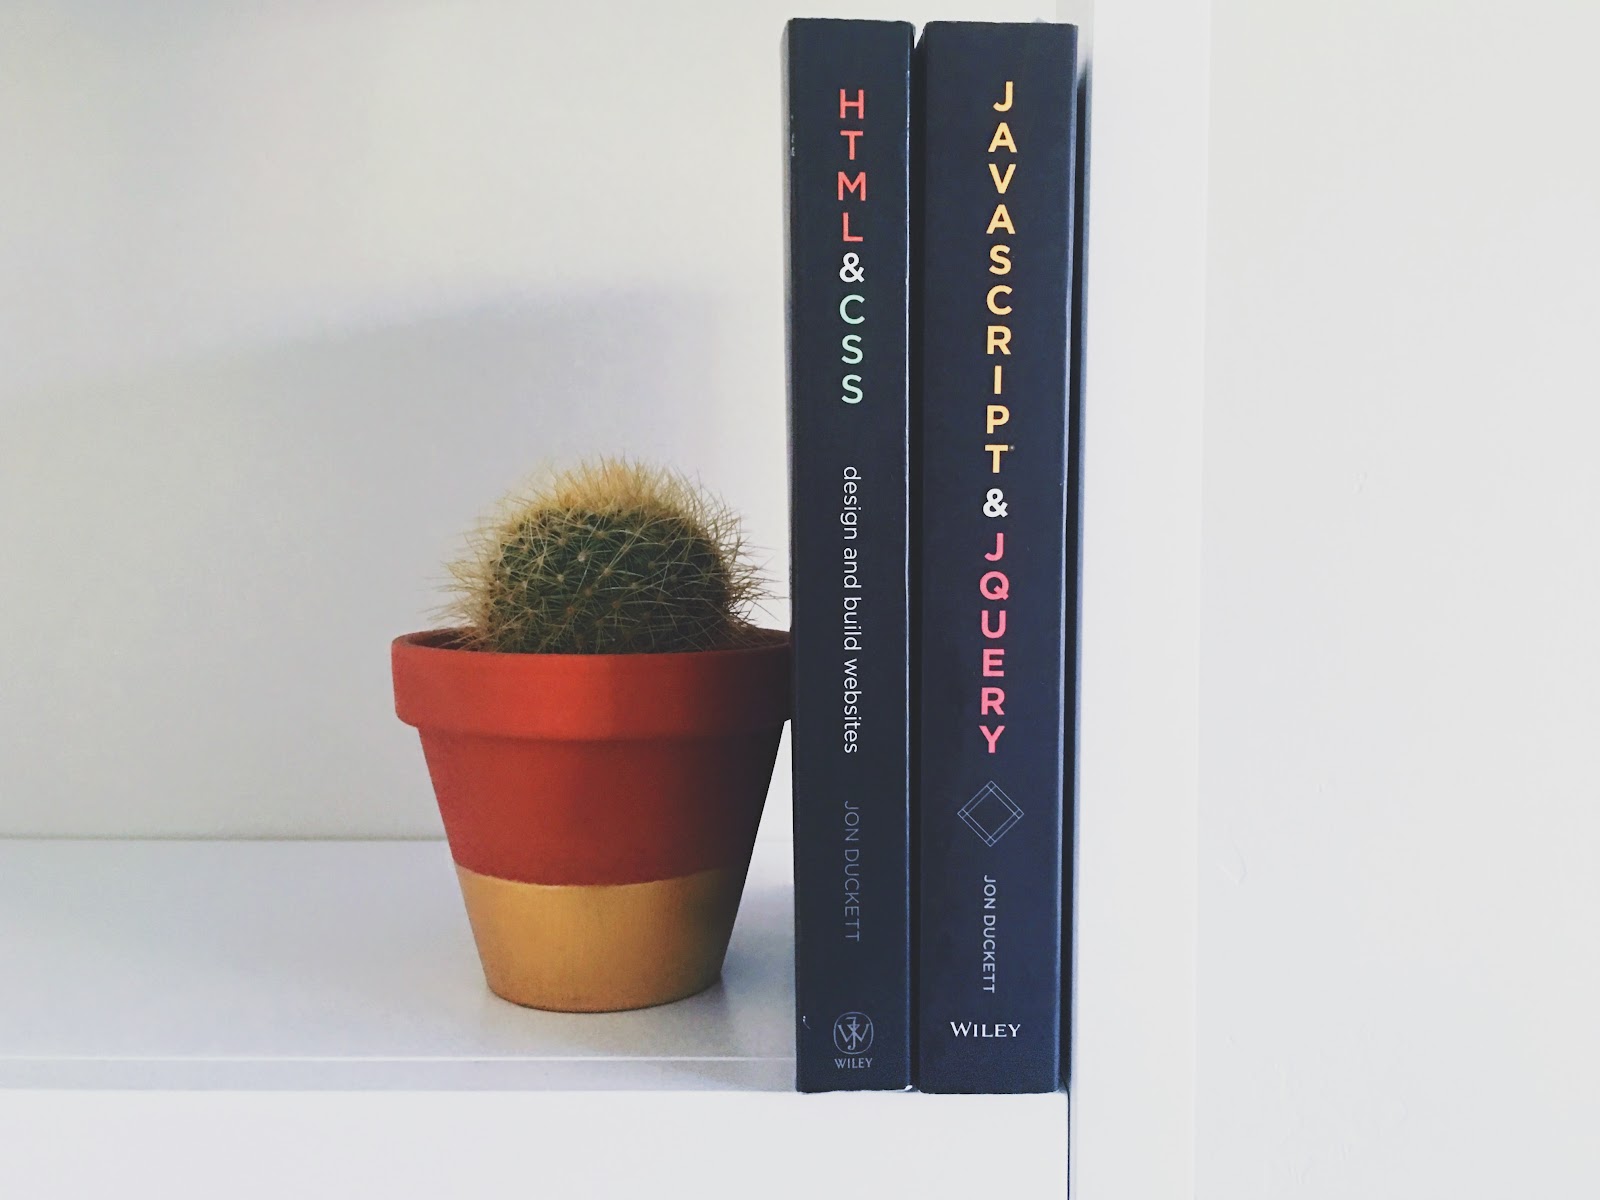 Web coding books next to a cactus